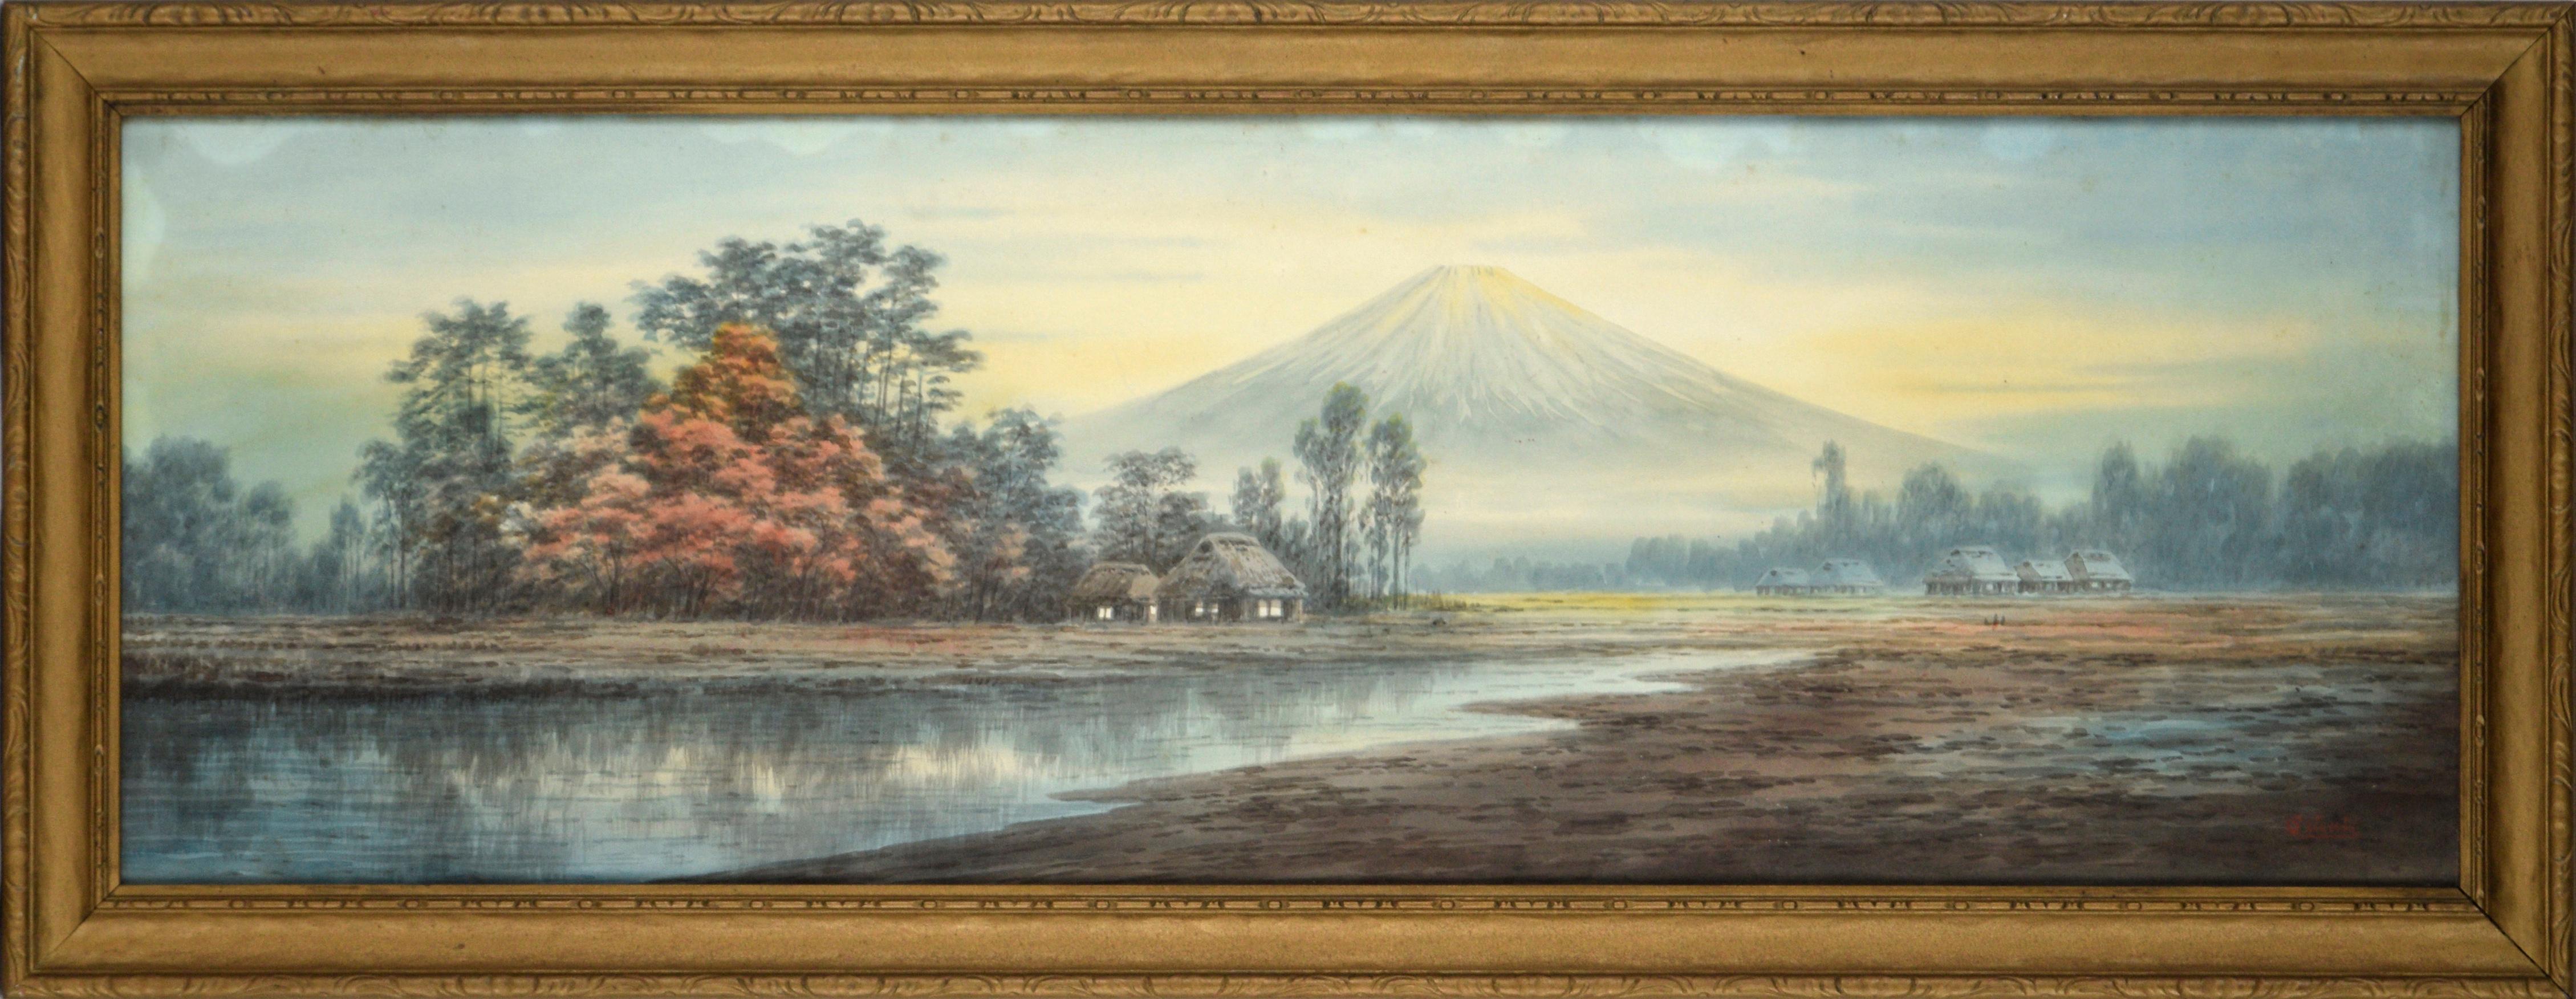 Emiko Satsuta Landscape Art - Sunrise Over Mt. Fuji, Japanese Watercolor Landscape